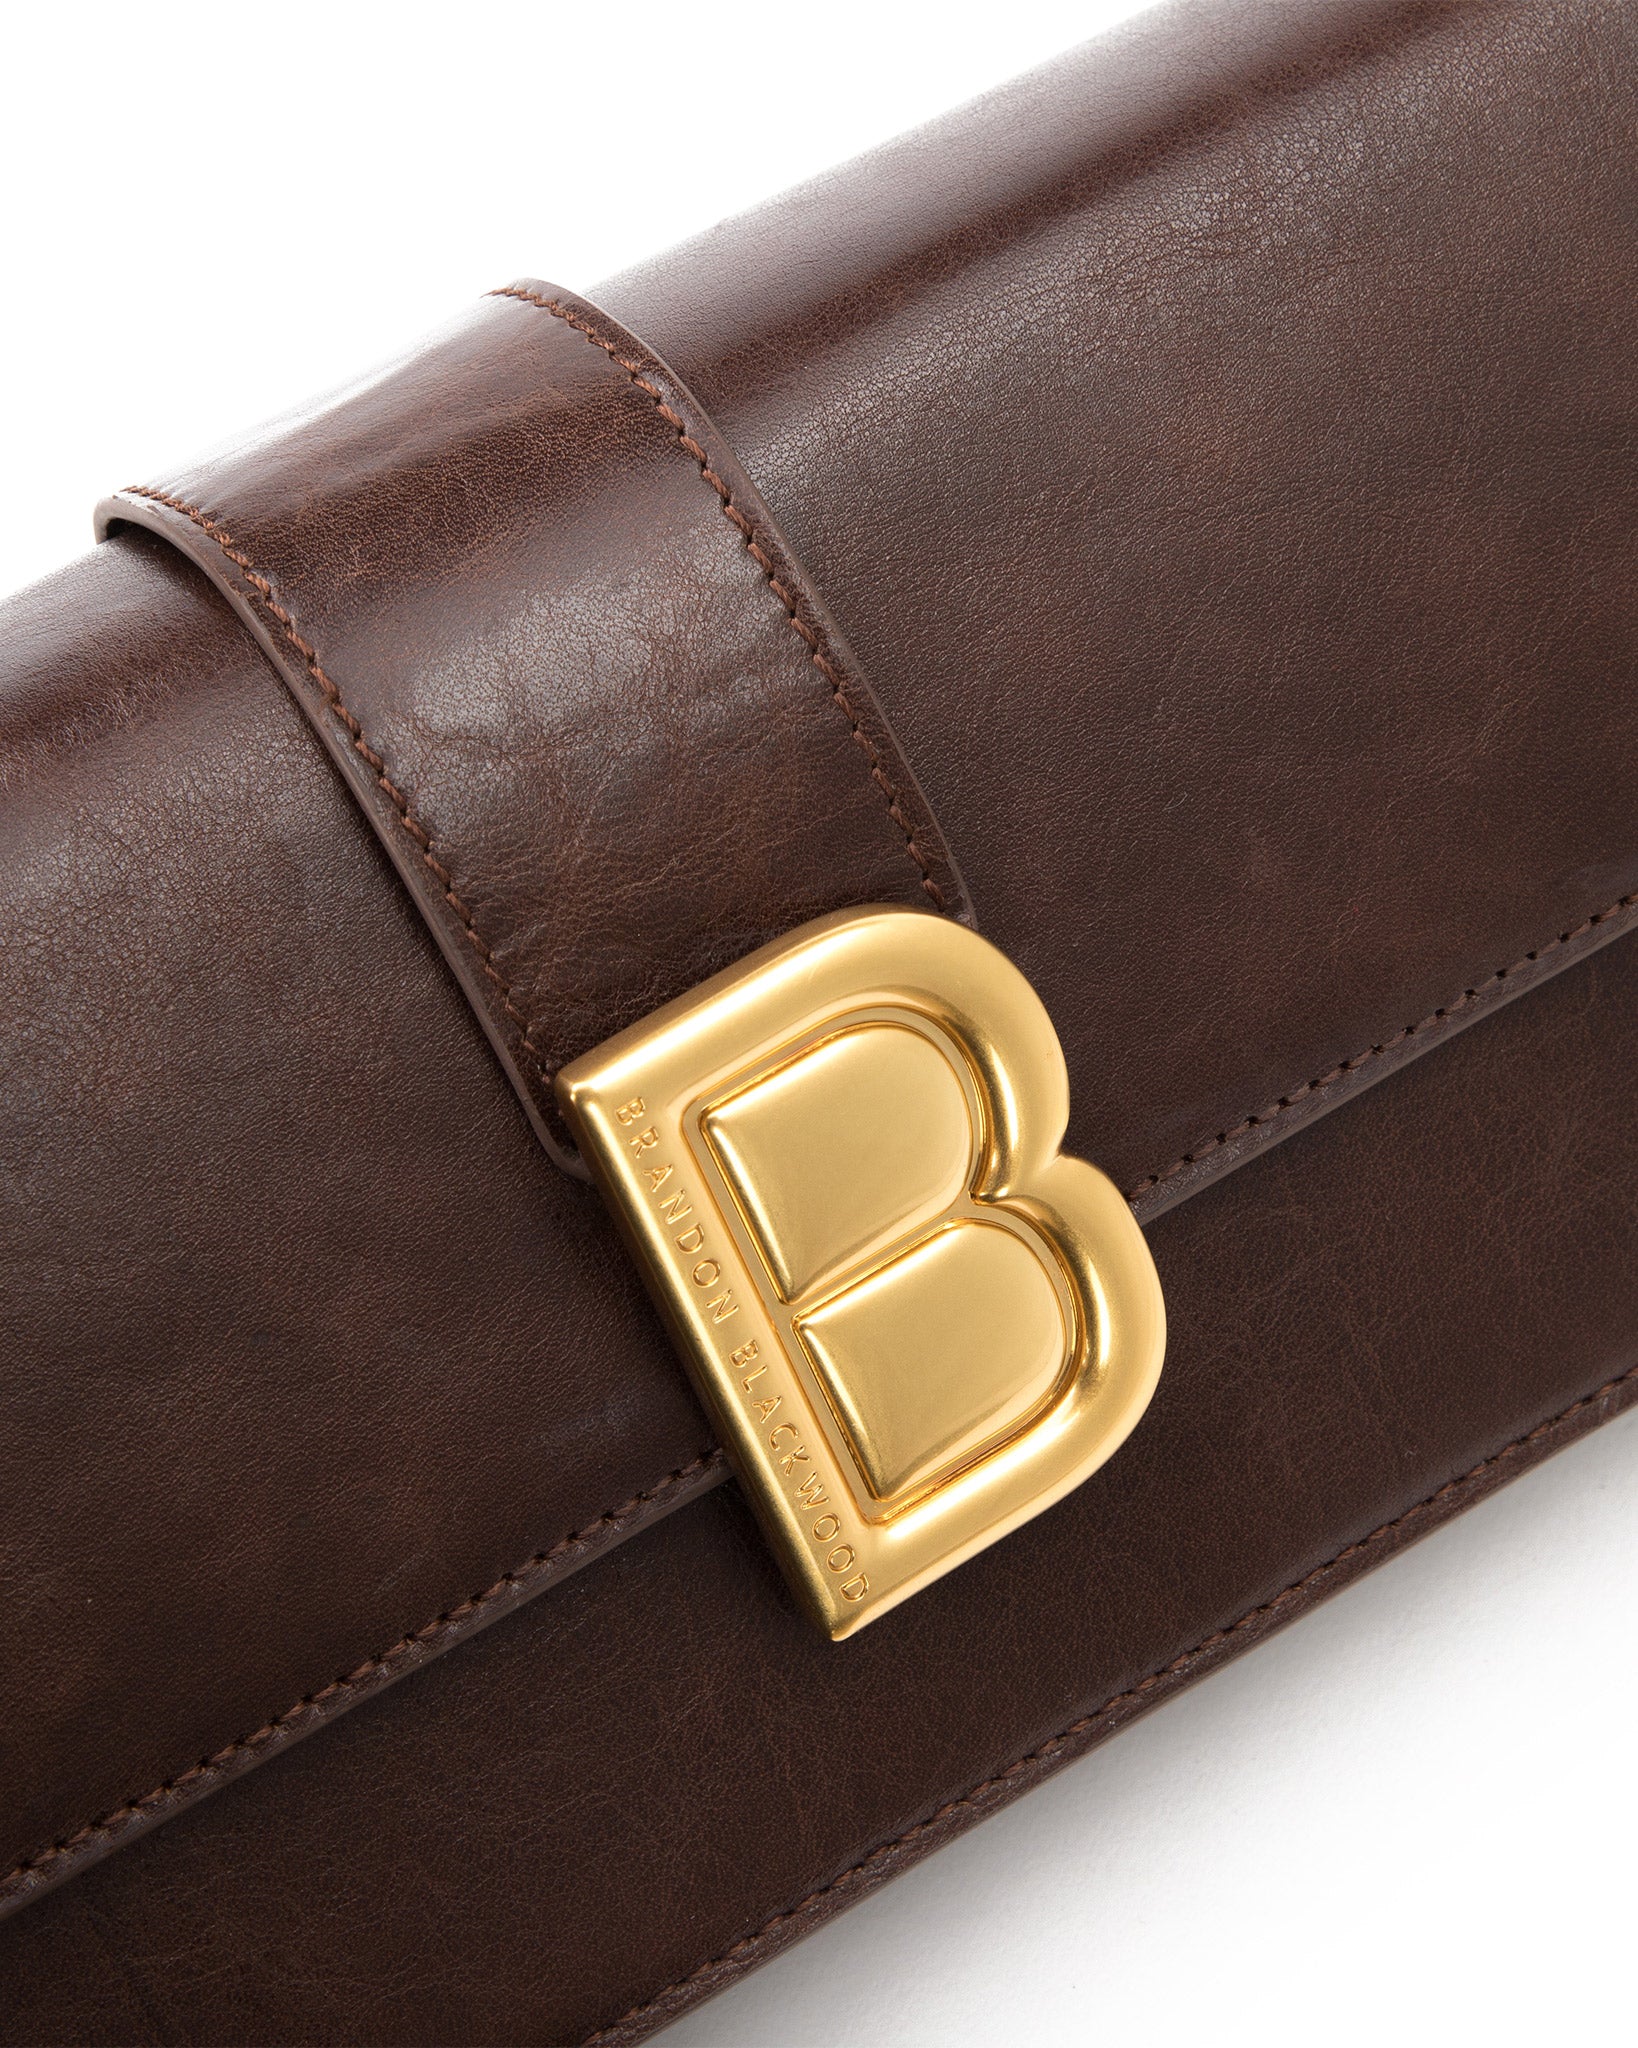 Brandon Blackwood New York - Nia Bag - Brown Cracked Leather